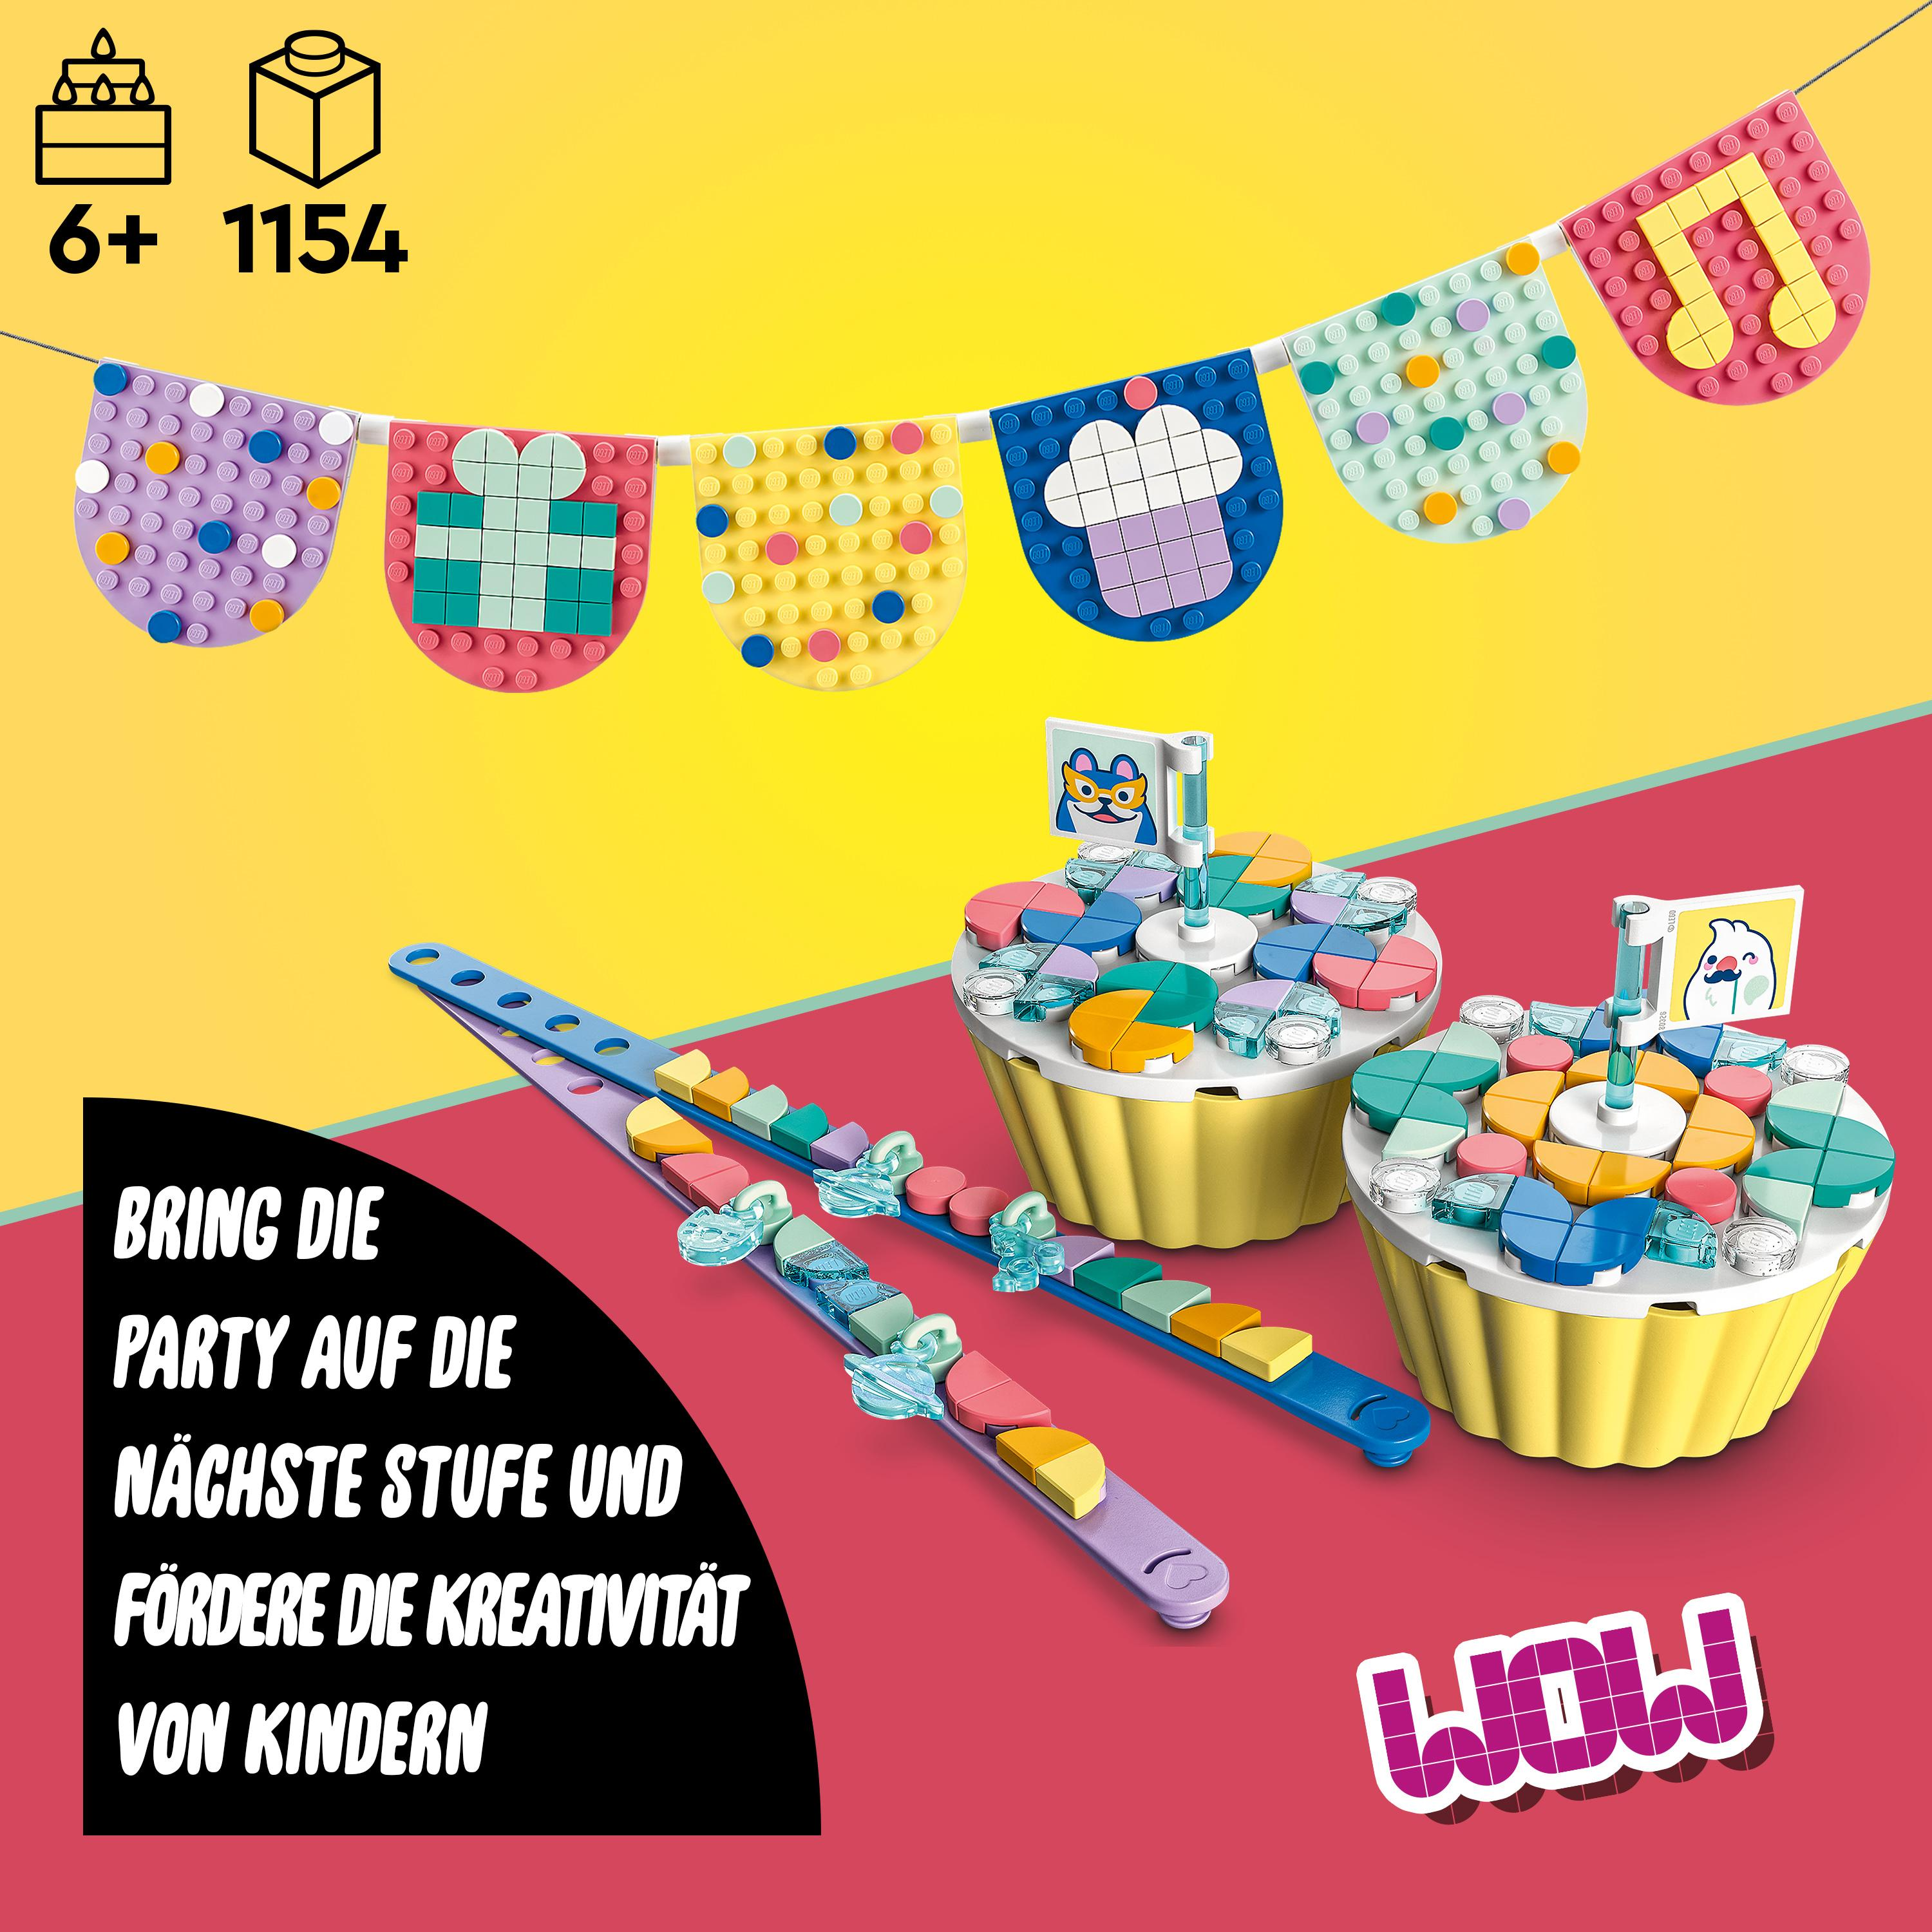 Ultimatives Partyset Mehrfarbig 41806 DOTS LEGO Bausatz,